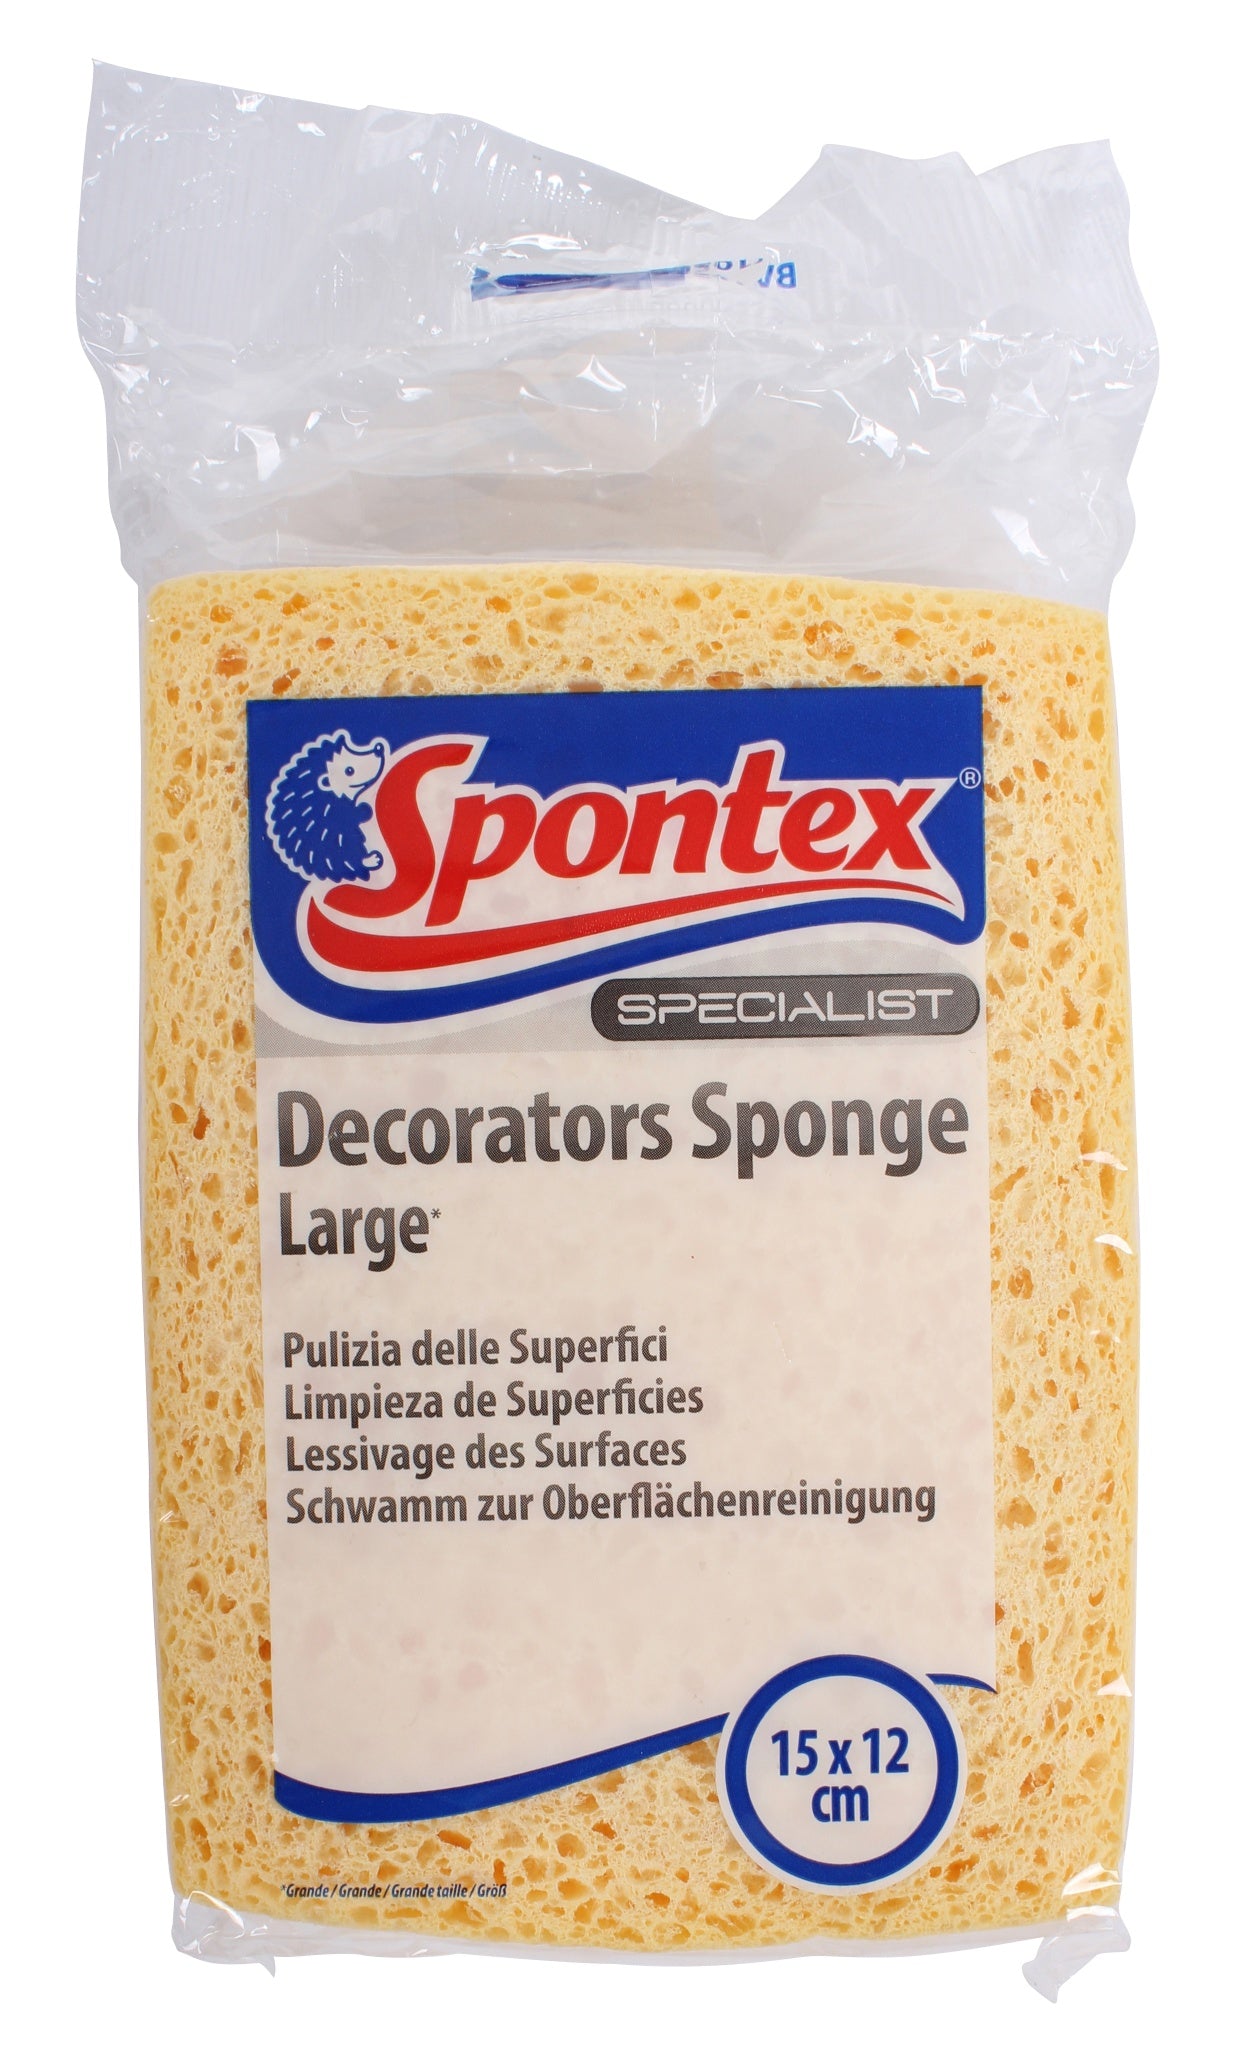 Spontex Decorators Sponge